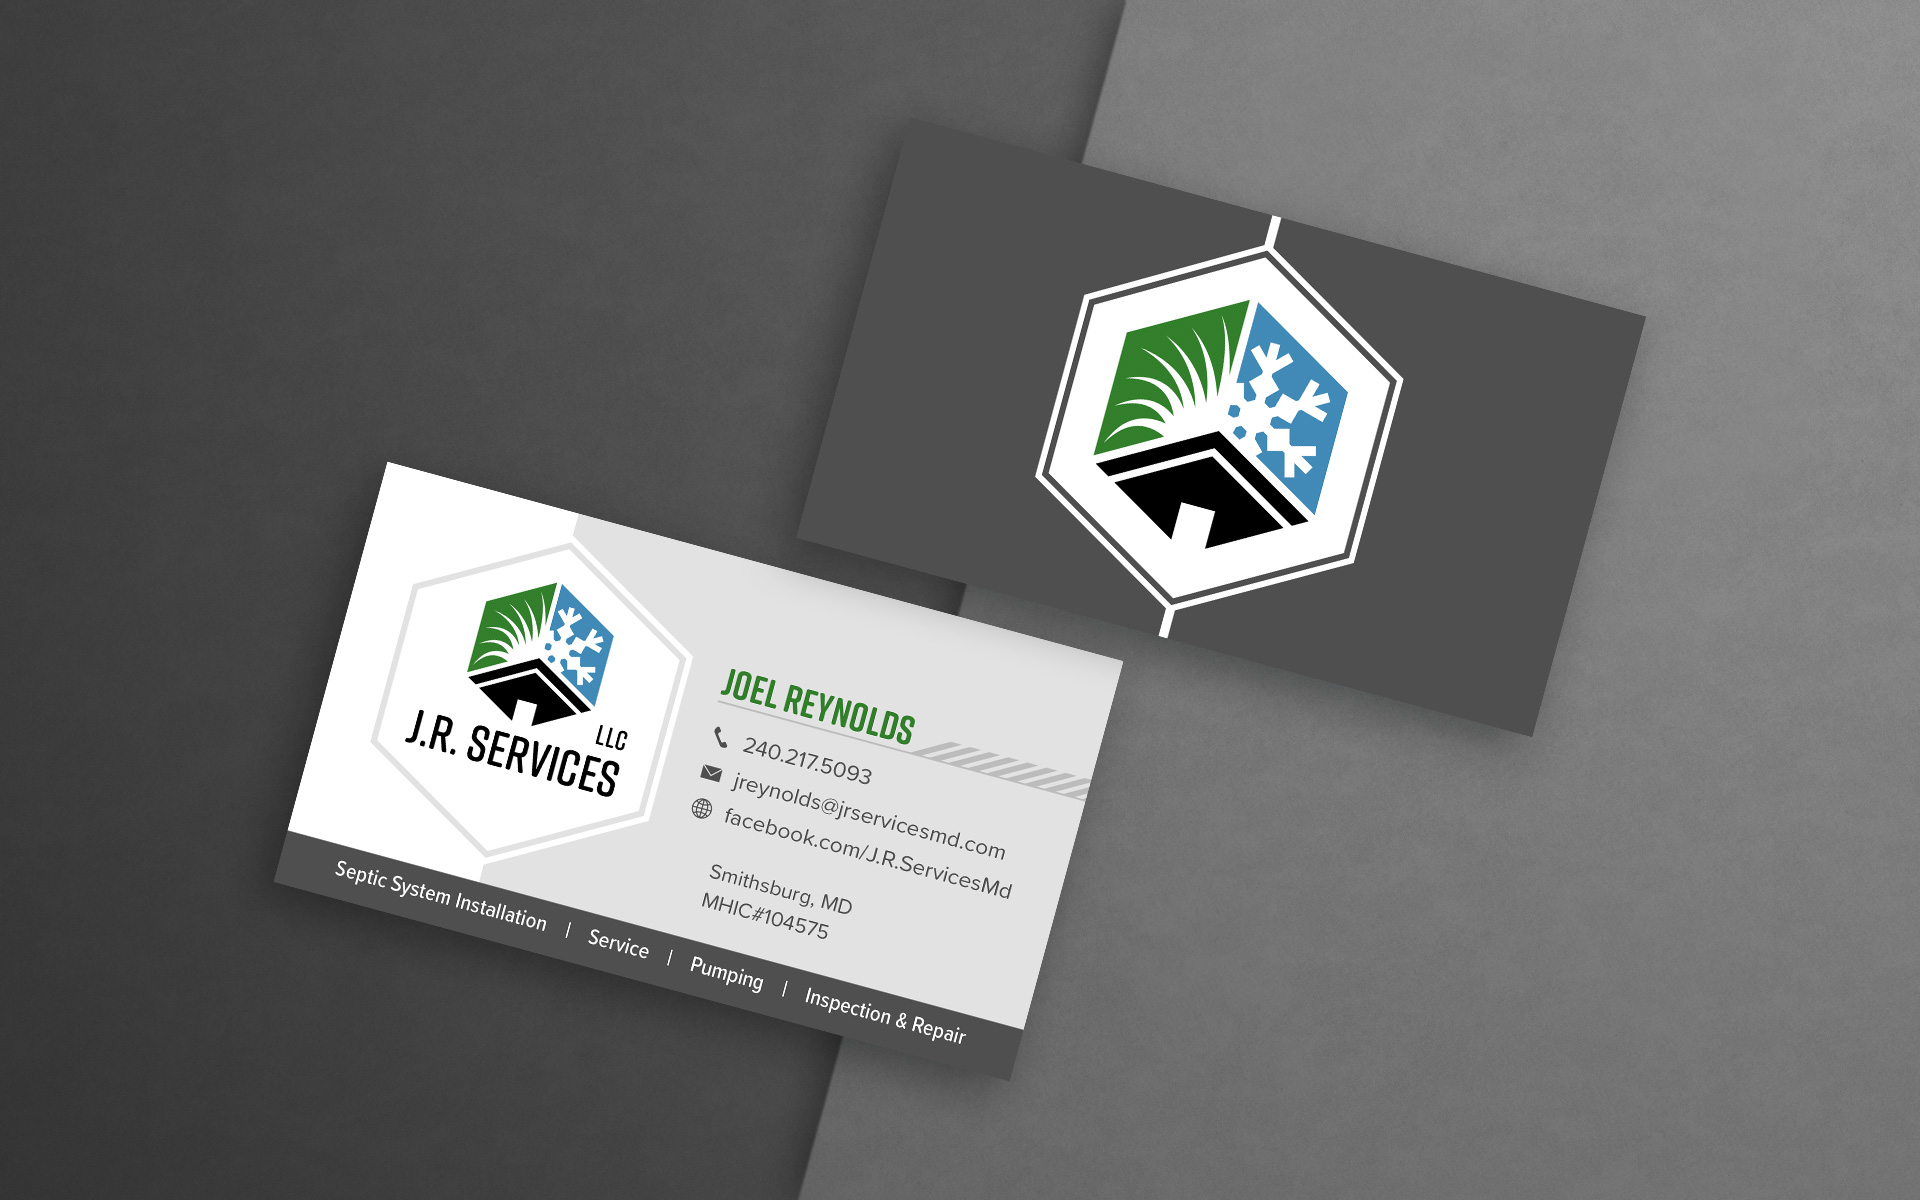 J.R. Services business card design.